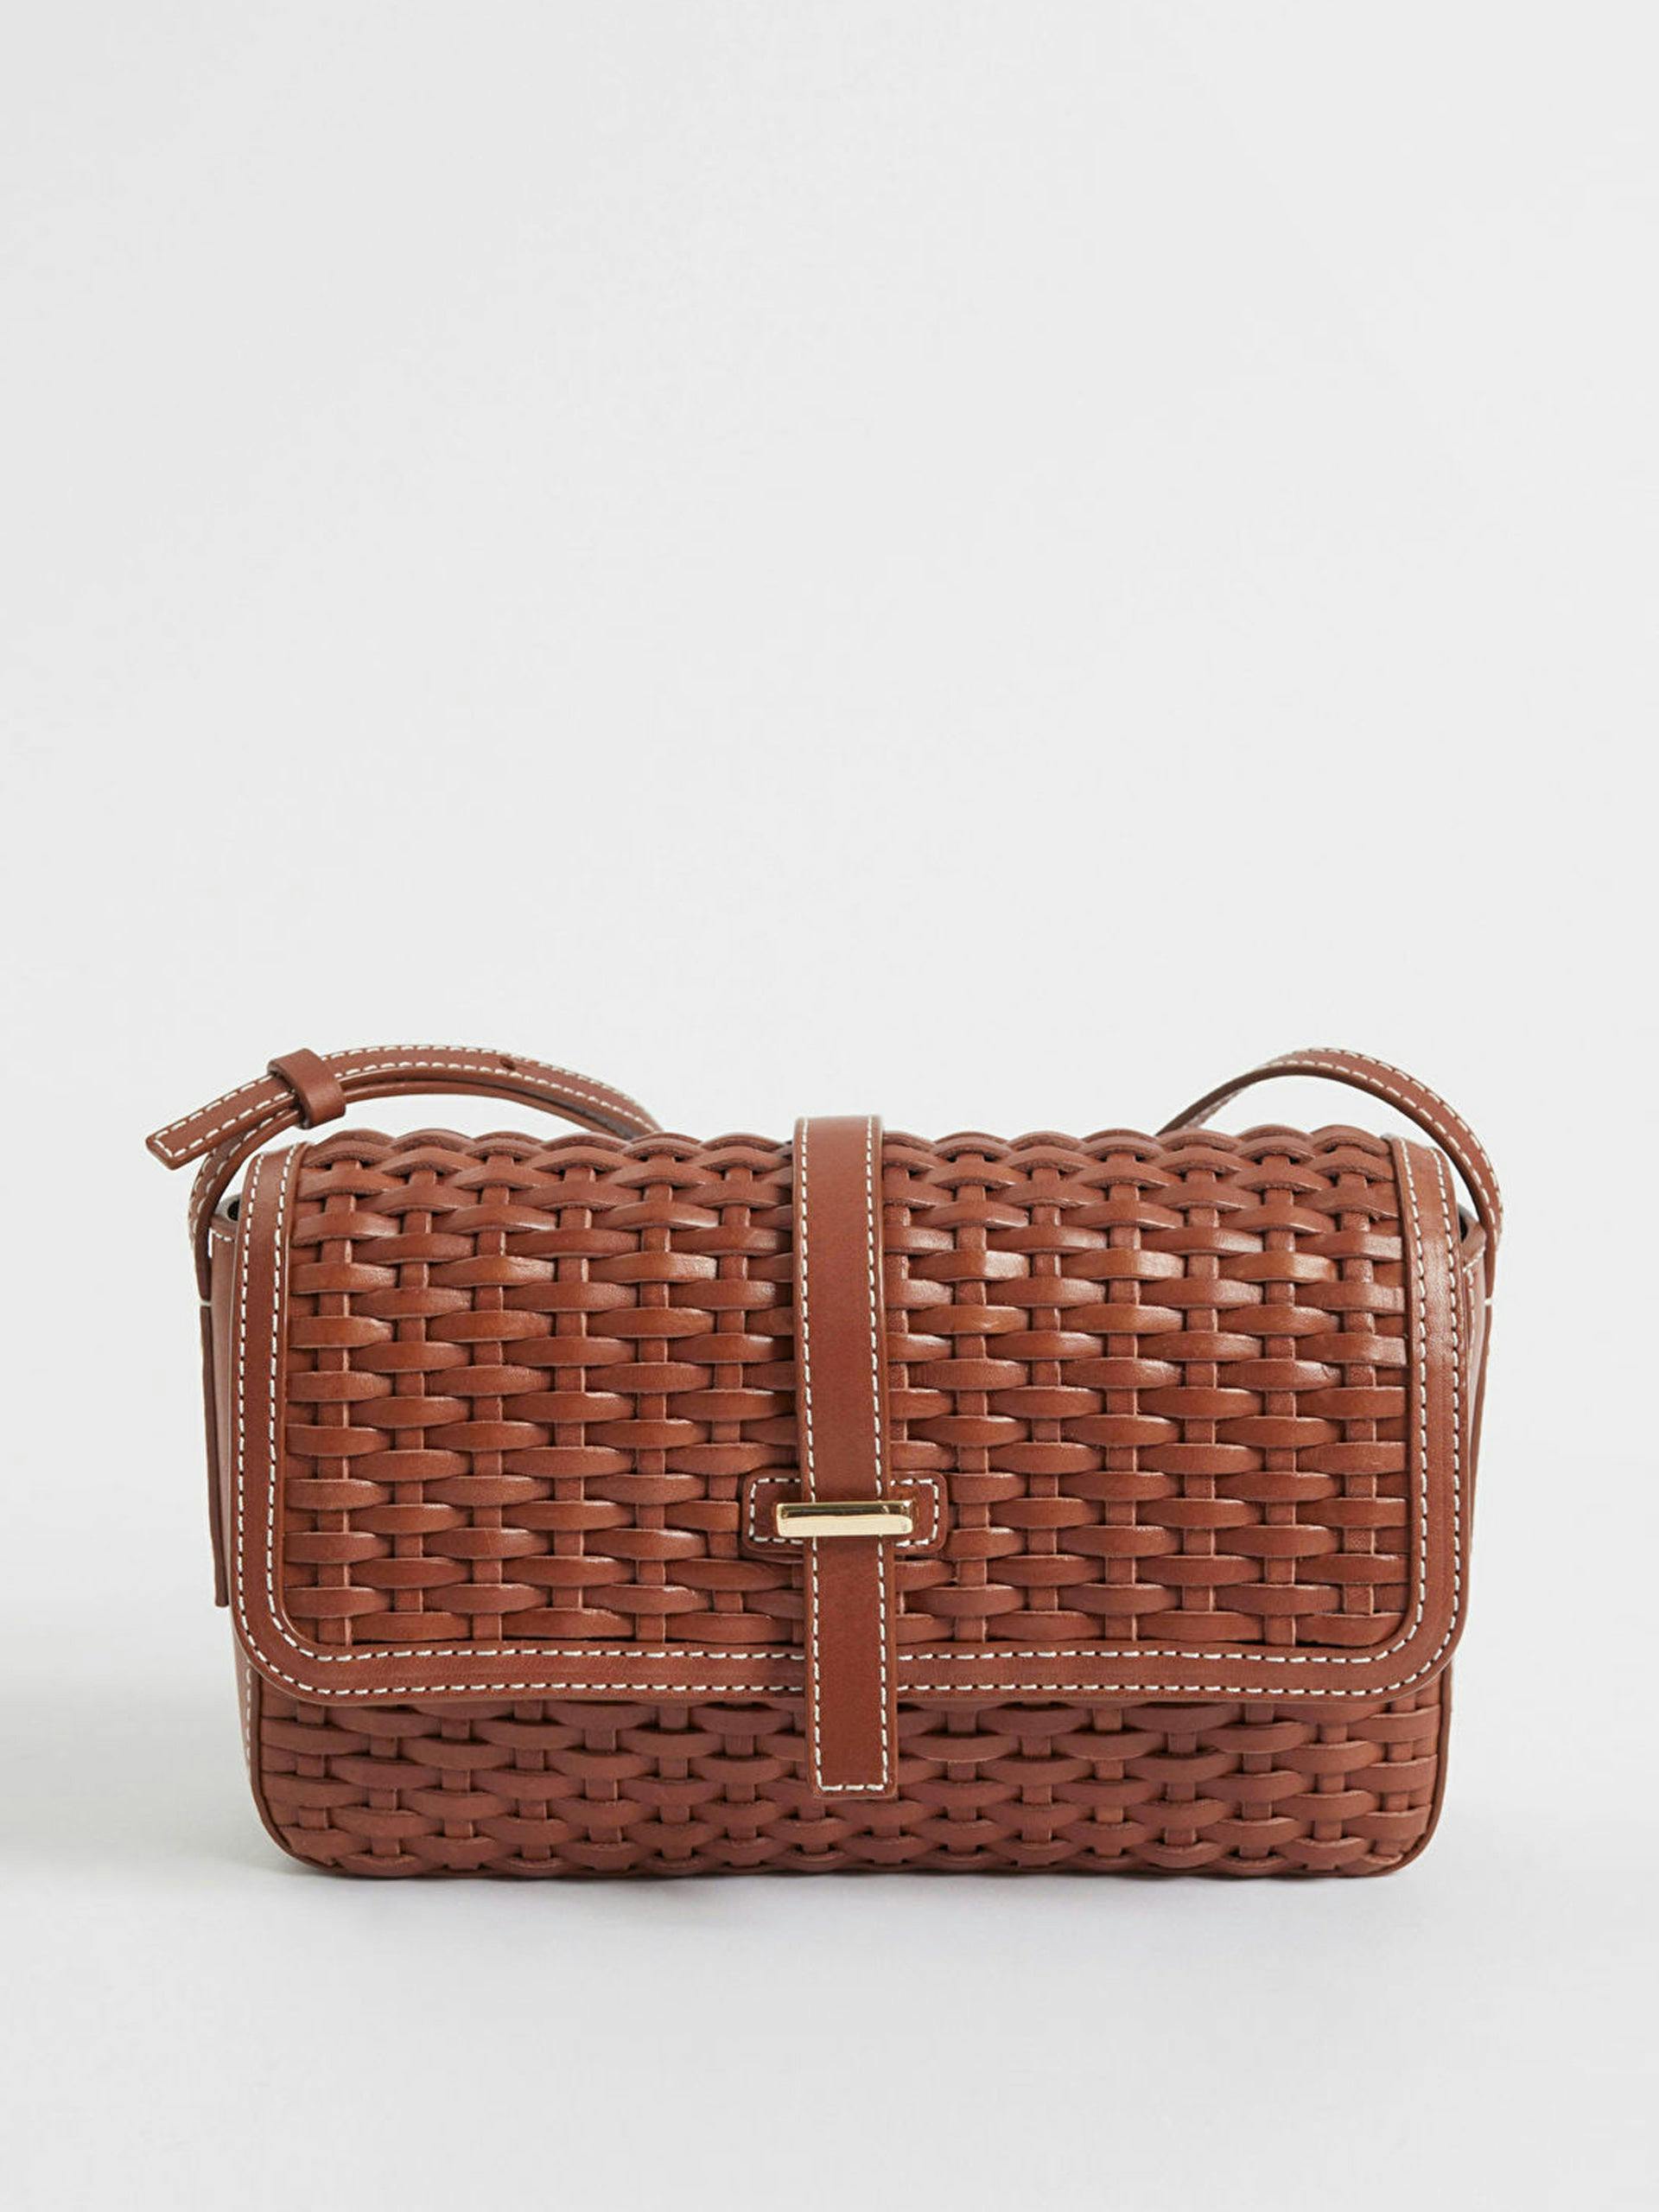 braided leather messenger bag